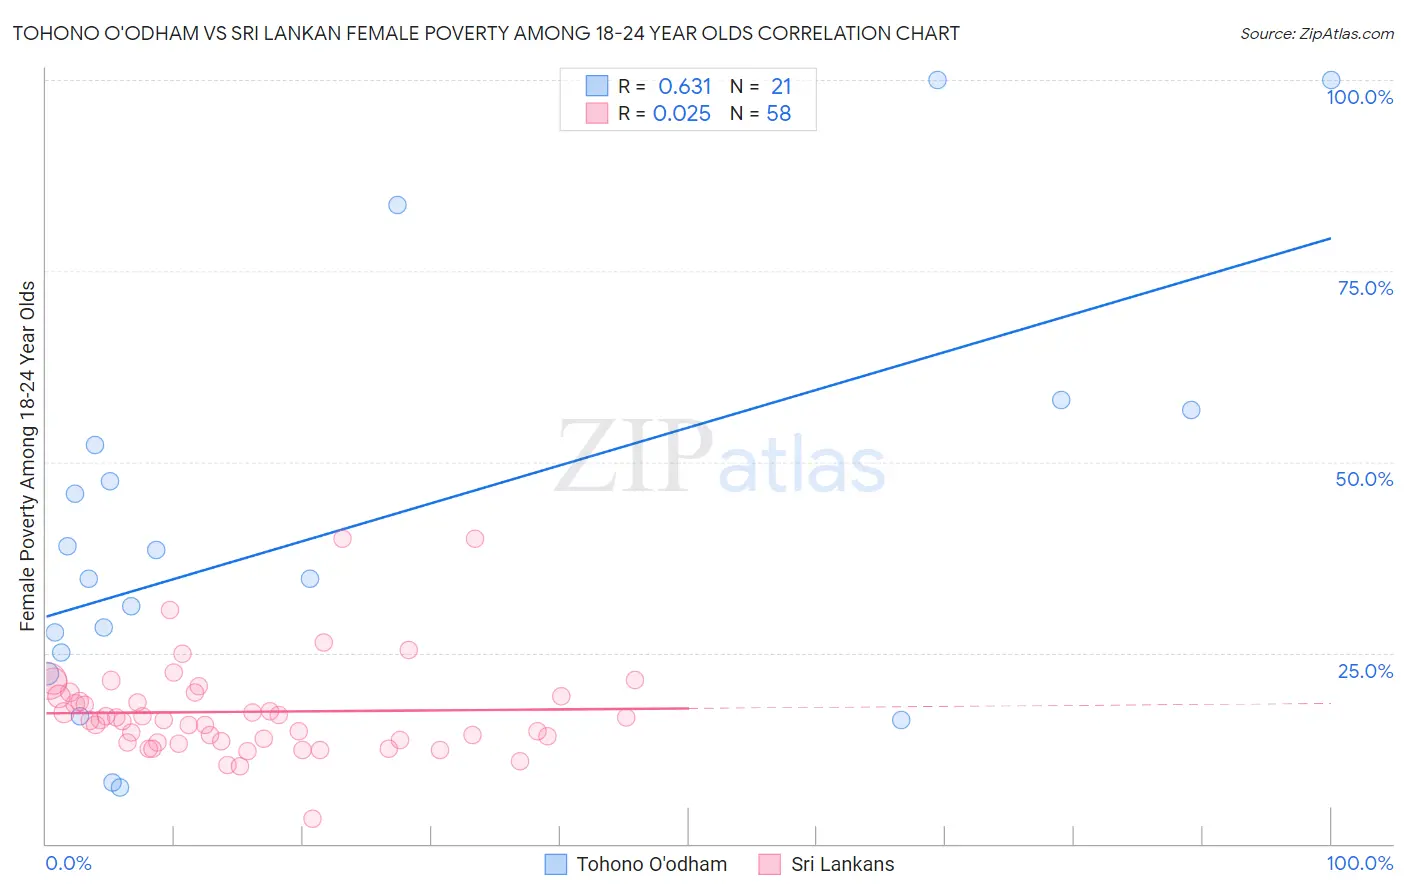 Tohono O'odham vs Sri Lankan Female Poverty Among 18-24 Year Olds